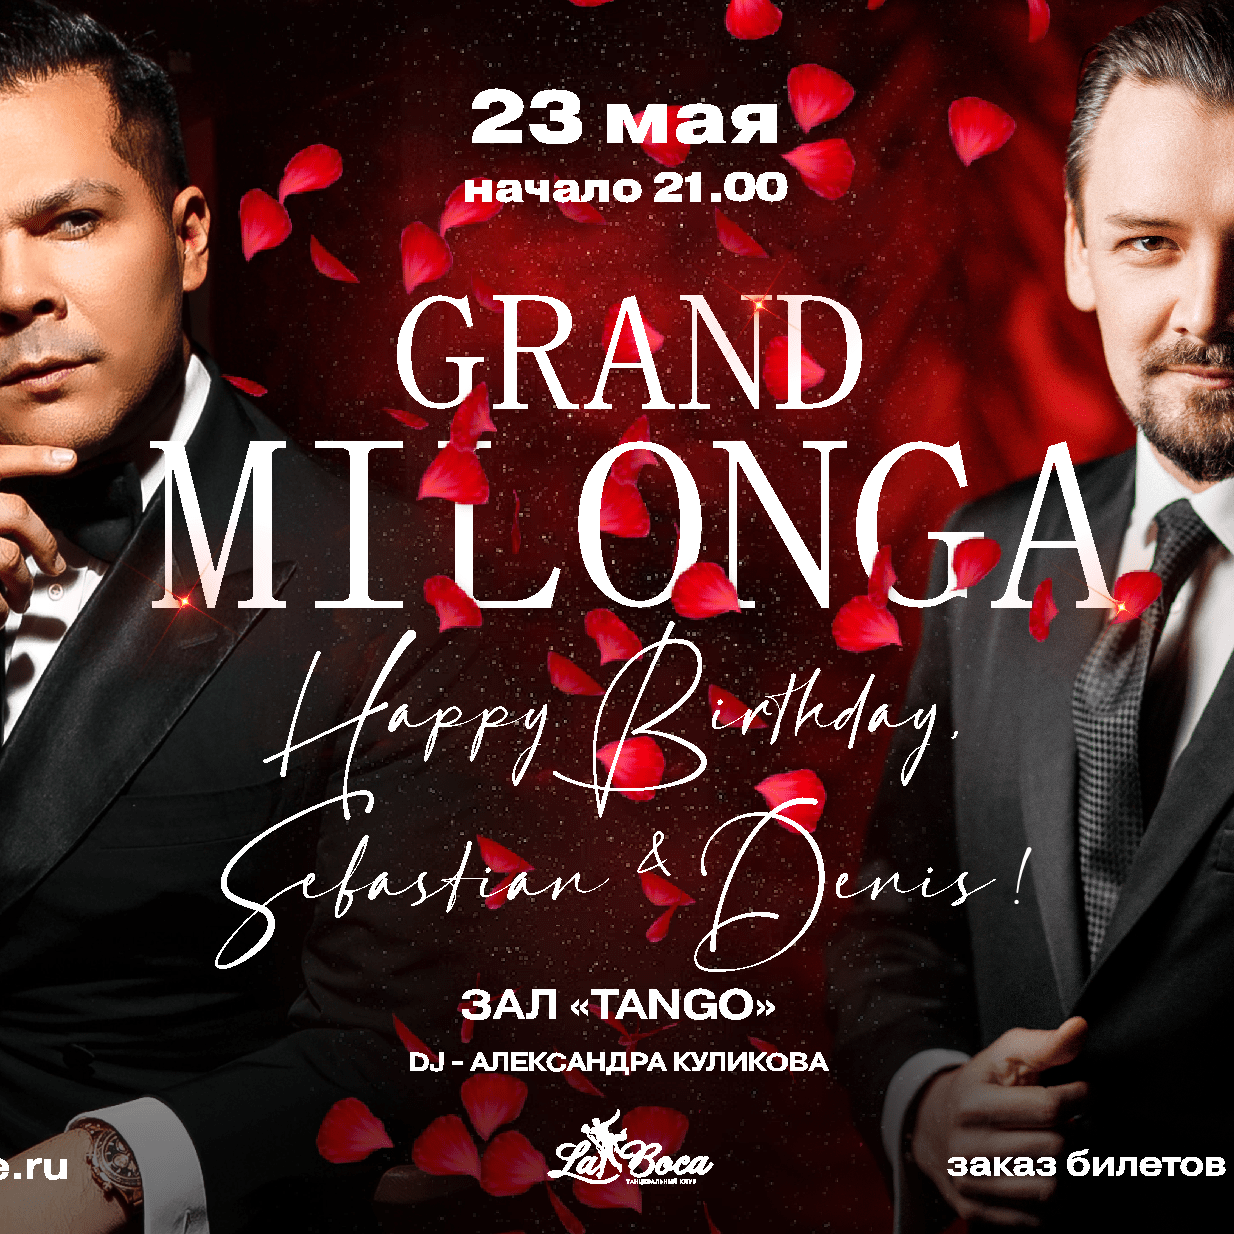 Grand Milonga. Happy Birthday Sebastian&Denis